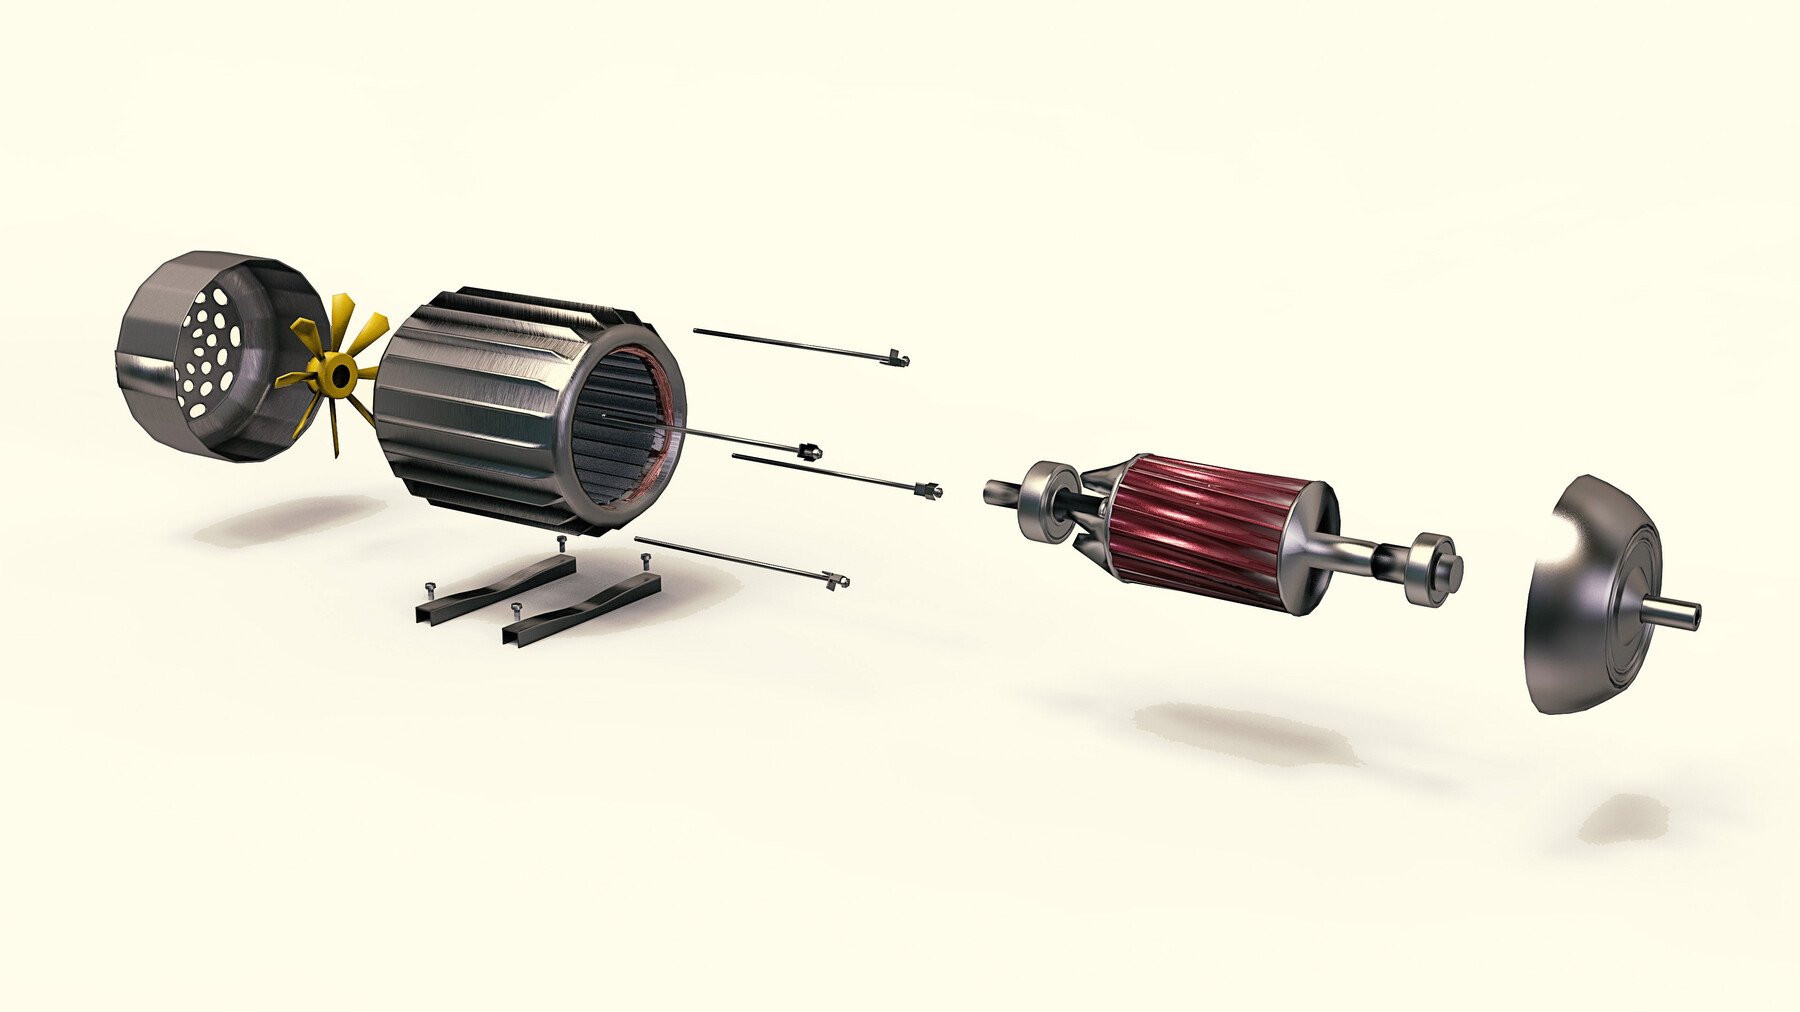 ArtStation - Electric motor - motor casing, stator, rotor armature, winding,  exploded model | Game Assets